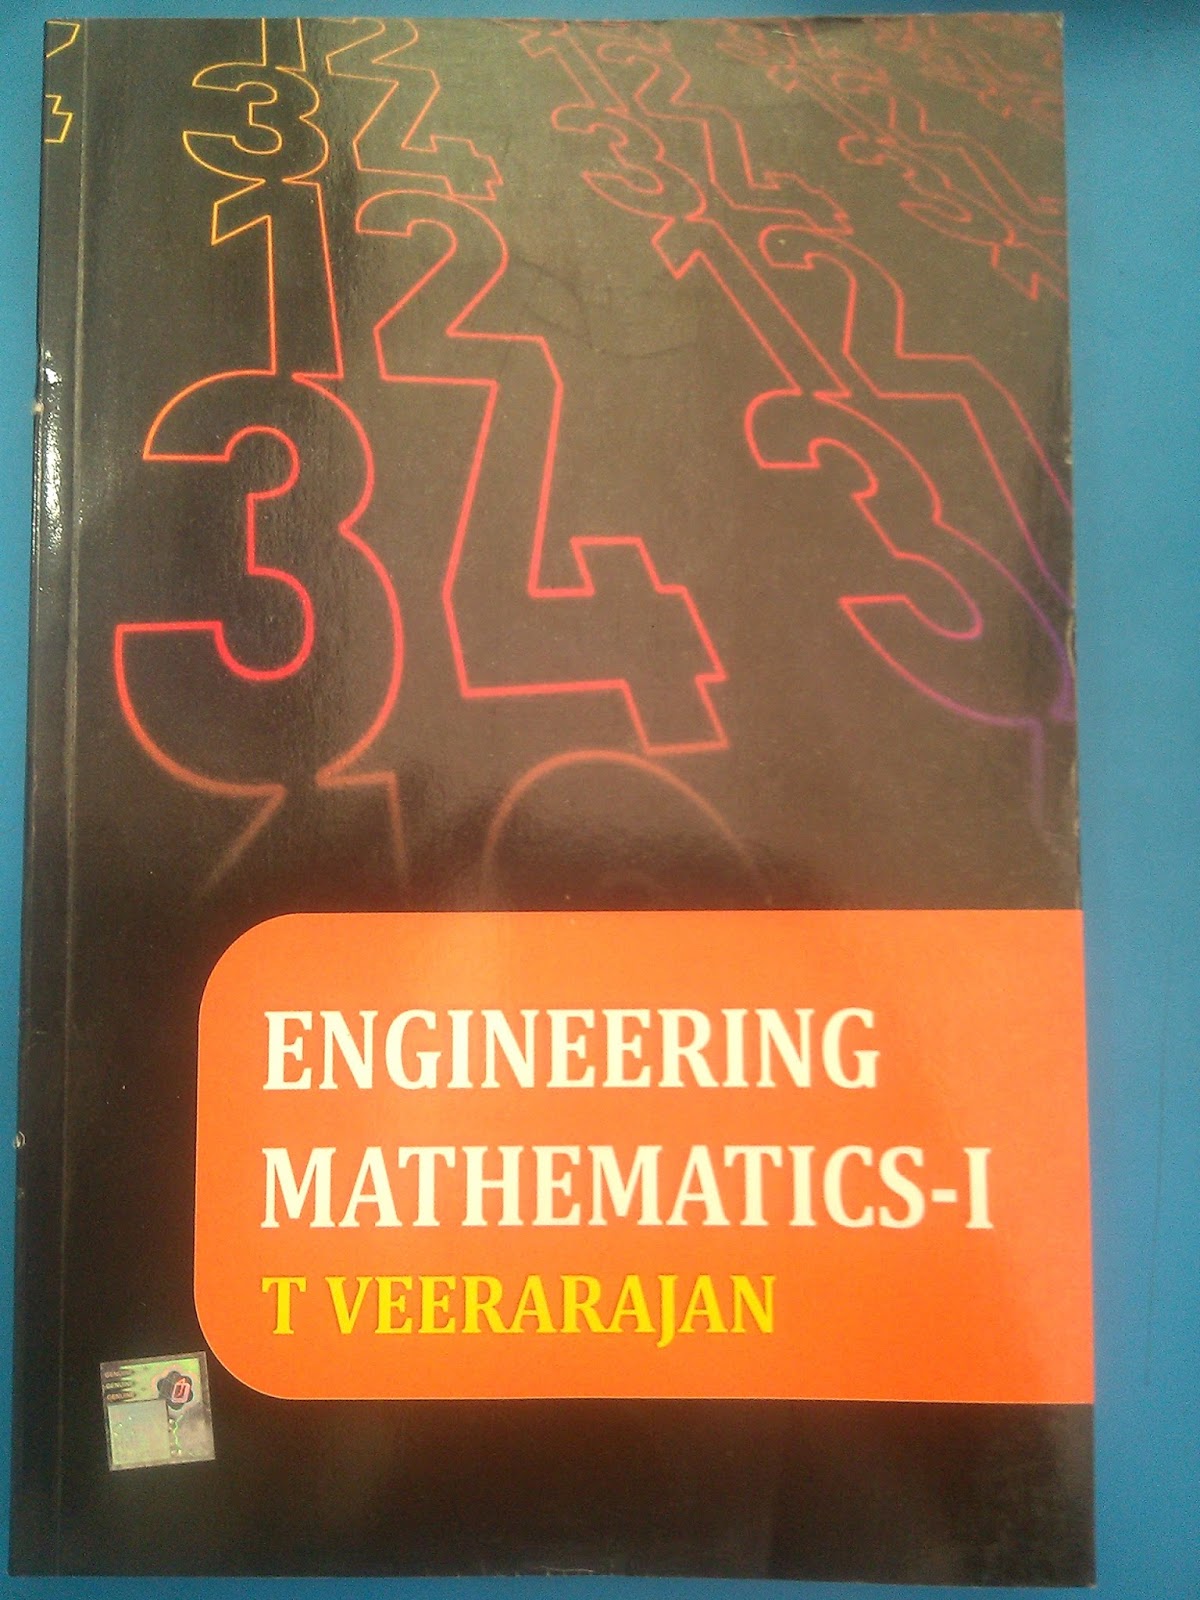 bs grewal engineering mathematics pdf